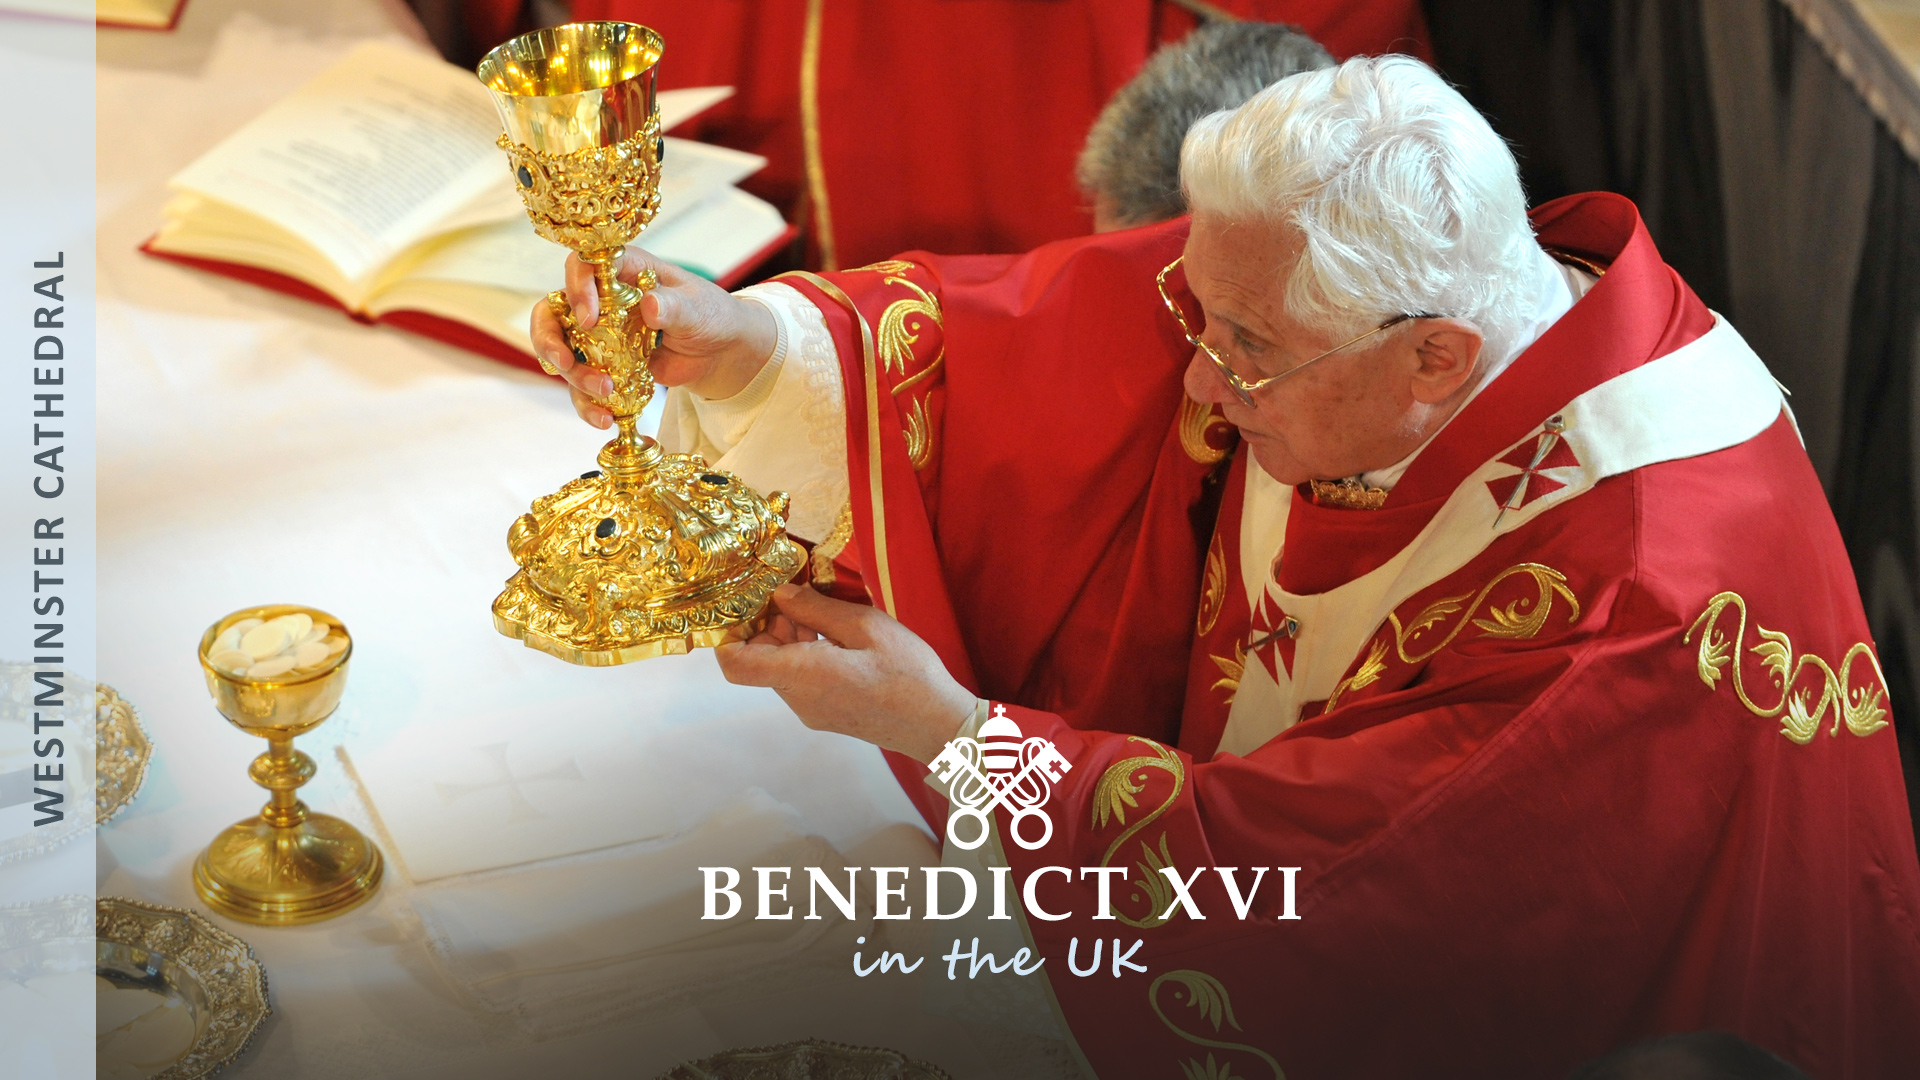 Catholic Church Benedict XVI celebrates Mass in Westminster Cathedral #PapalVisit2010 #PopeInLondon